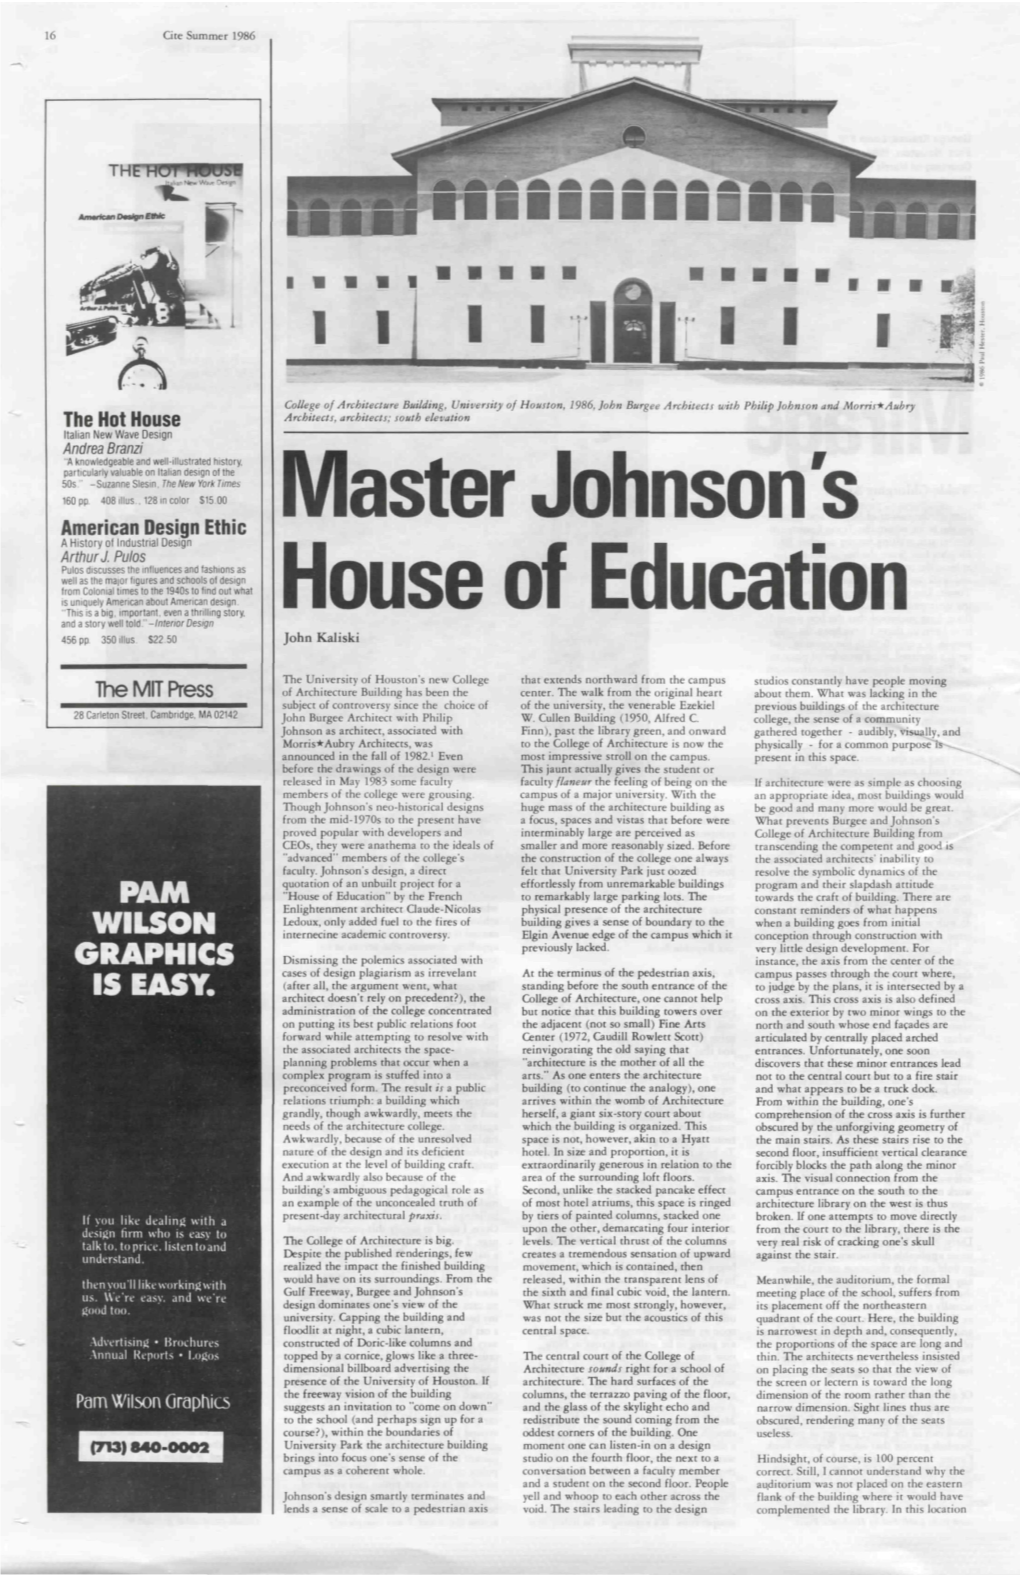 Master Johnson's House of Education